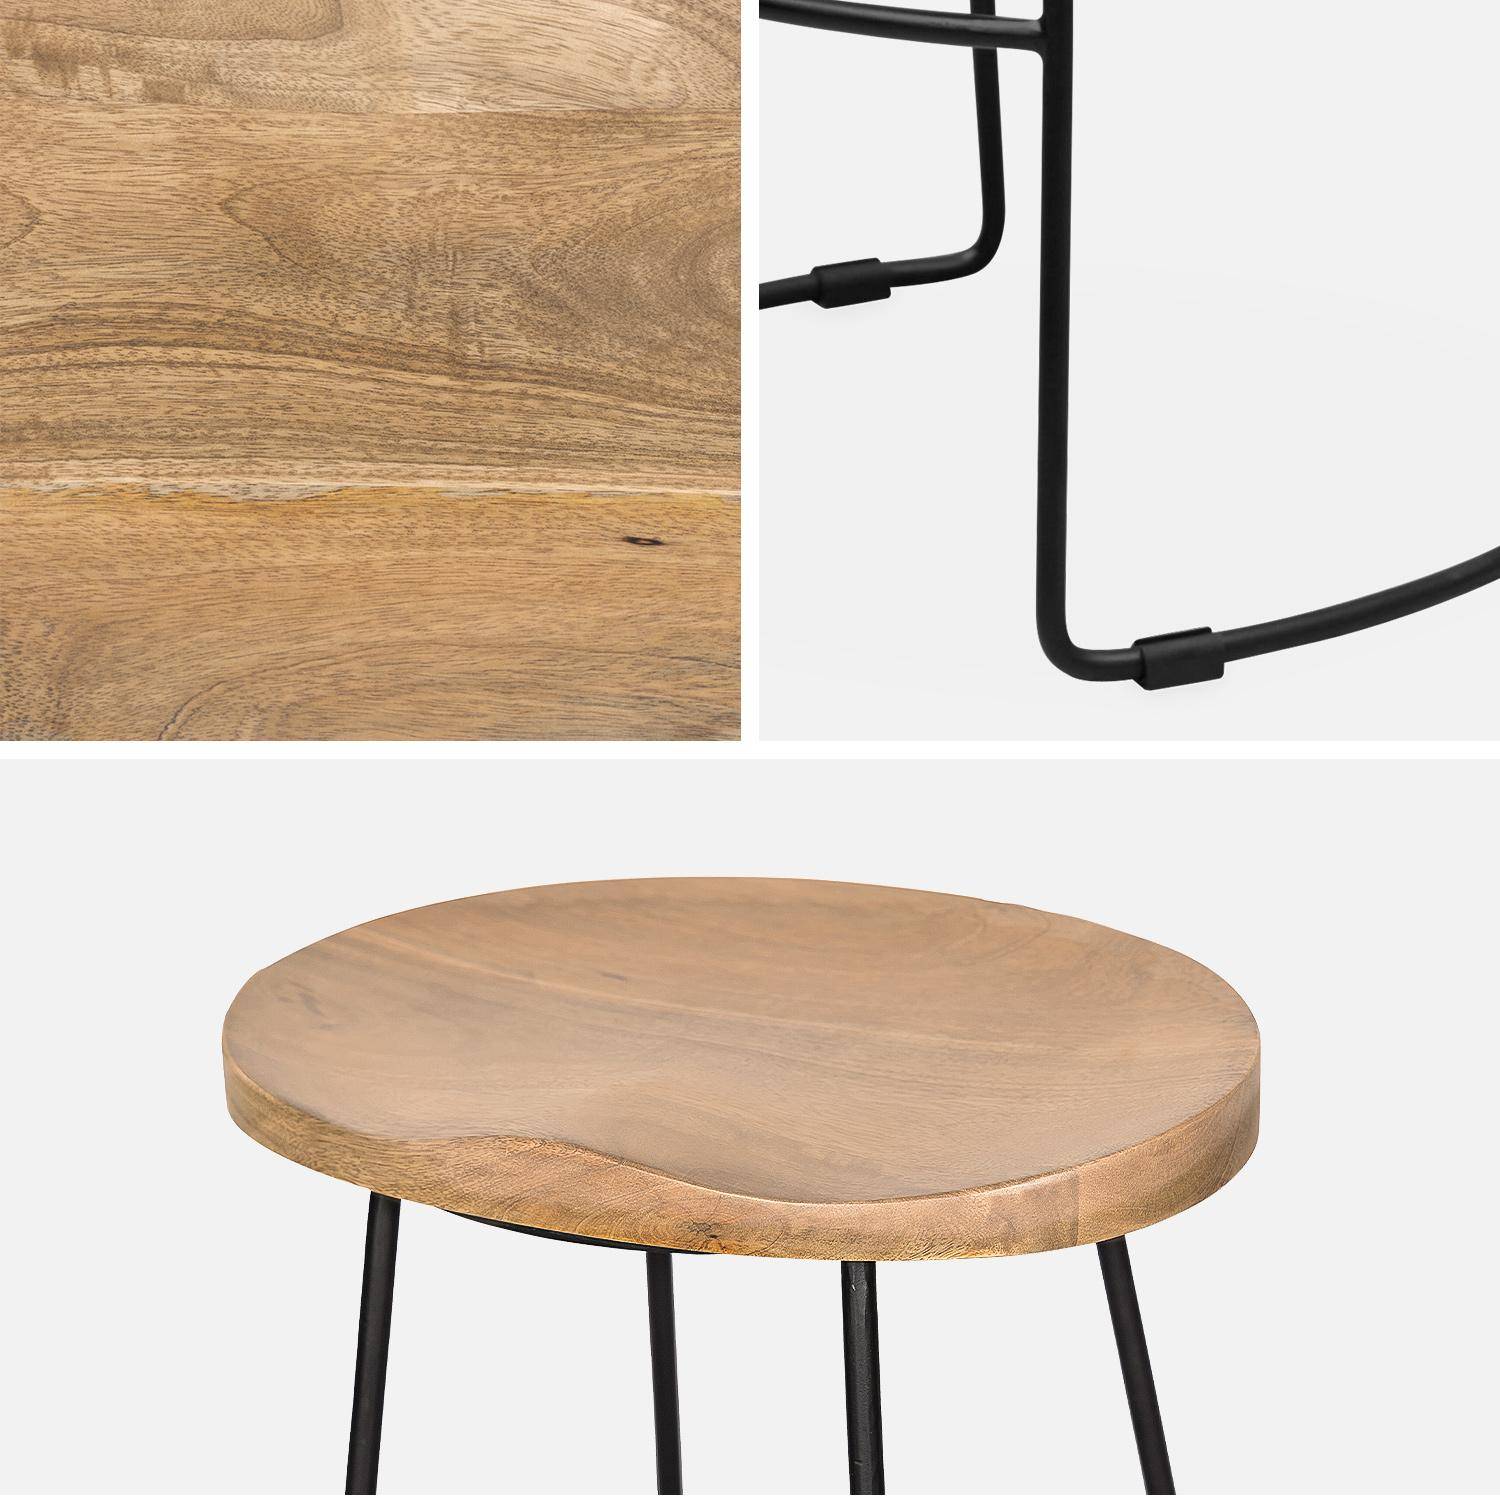 Set of 4 industrial metal and wooden bar stools, 47x40x75cm, Jaya, Mango wood seat, black metal legs,sweeek,Photo7